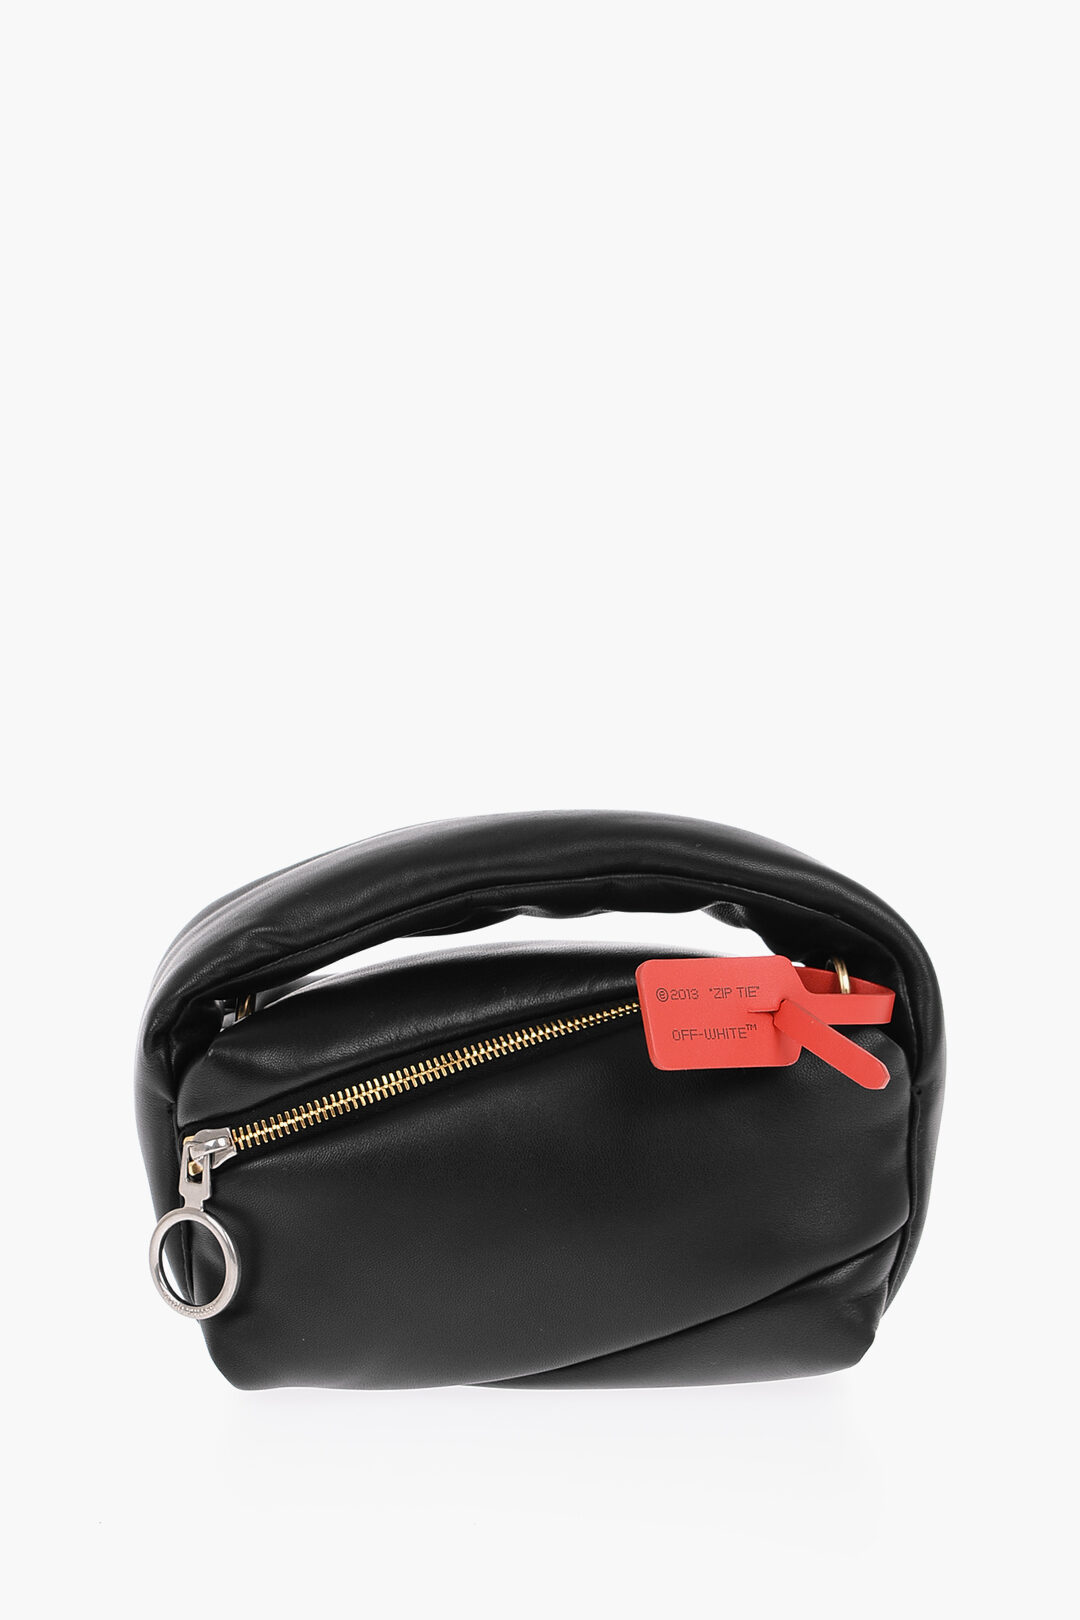 Tote Luxury Designer Bags Shopping Bag Fashion Leather Shoulder Bag Womens  Handbag Presbyopic For Women Purse Messenge Whole2807 From Alpsopk, $62.78  | DHgate.Com